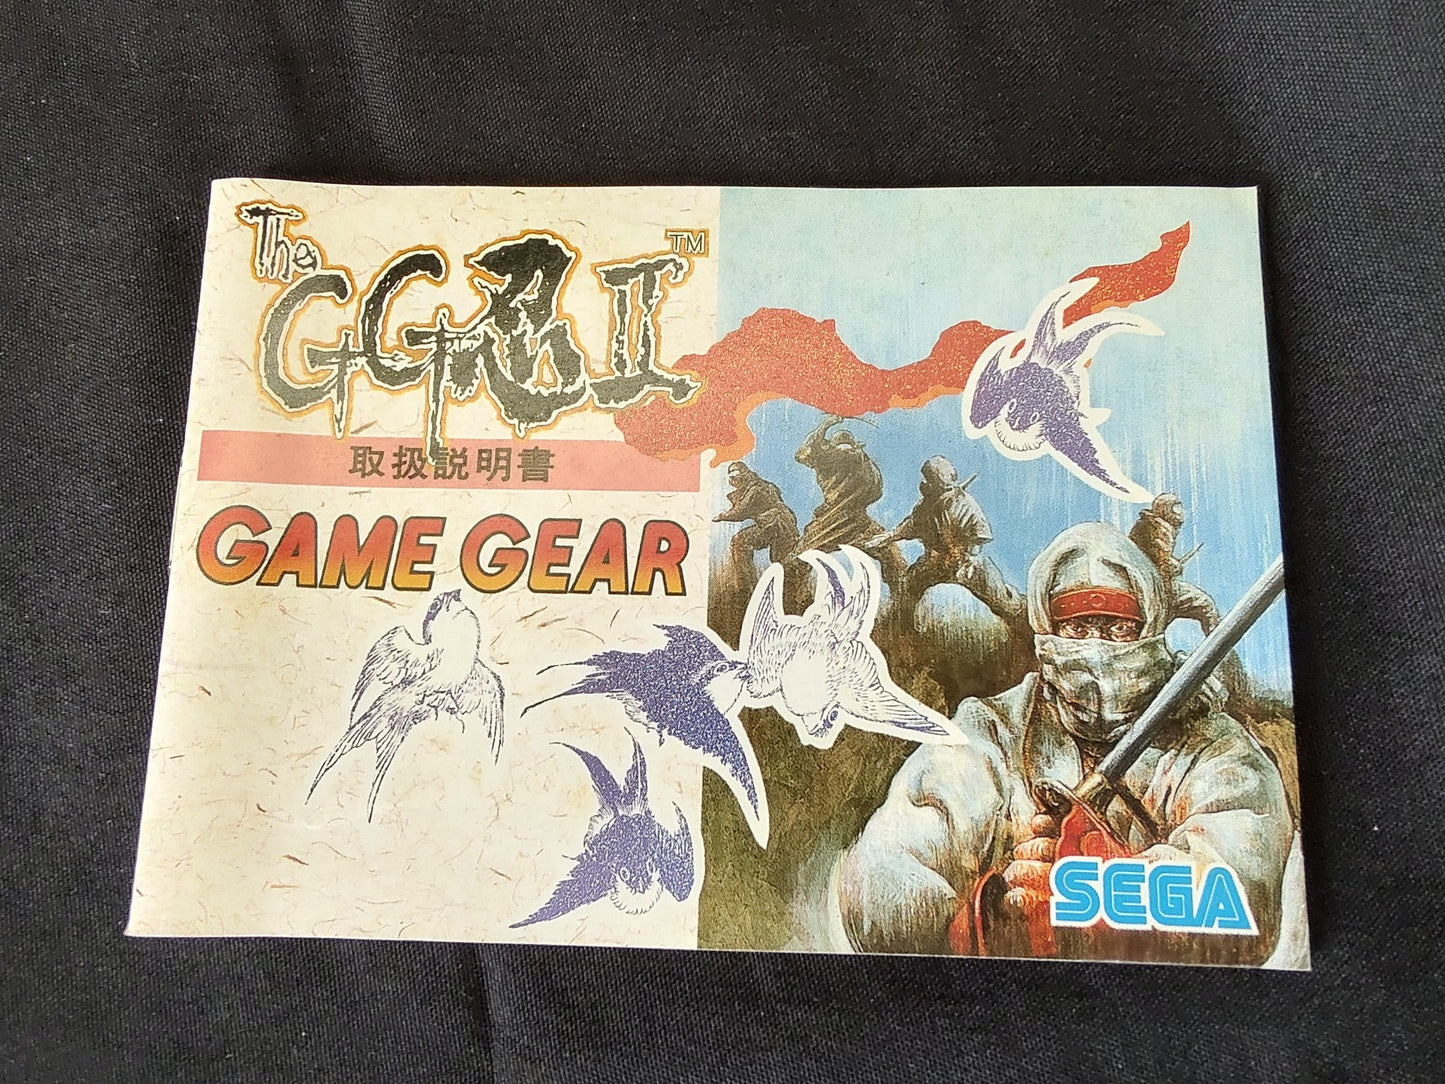 The GG Shinobi 2 SEGA GAME GEAR GG Cartridge,Manual,Boxed set tested-f0417-1